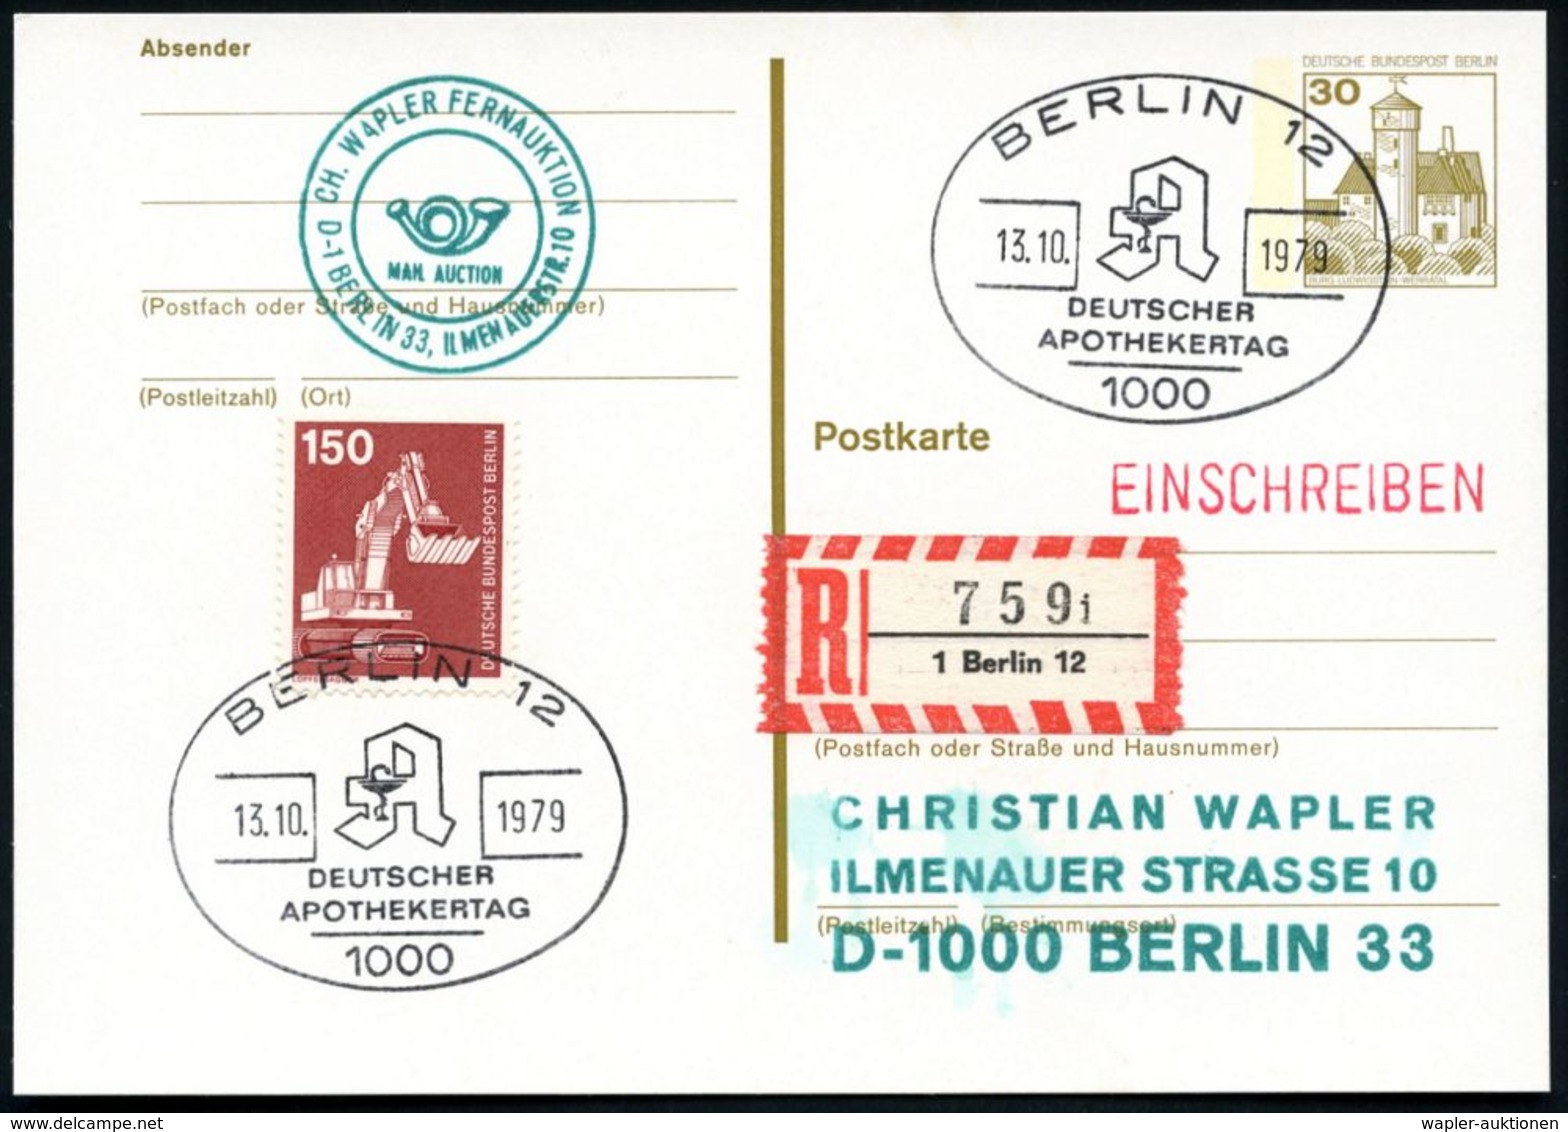 1000 BERLIN 12/ DEUTSCHER/ APOTHEKERTAG 1979 (13.10.) SSt (Monogr."A") + RZ: 1 Berlin 12/j, Orts-R-Karte (Bo.2054) - - Pharmacie